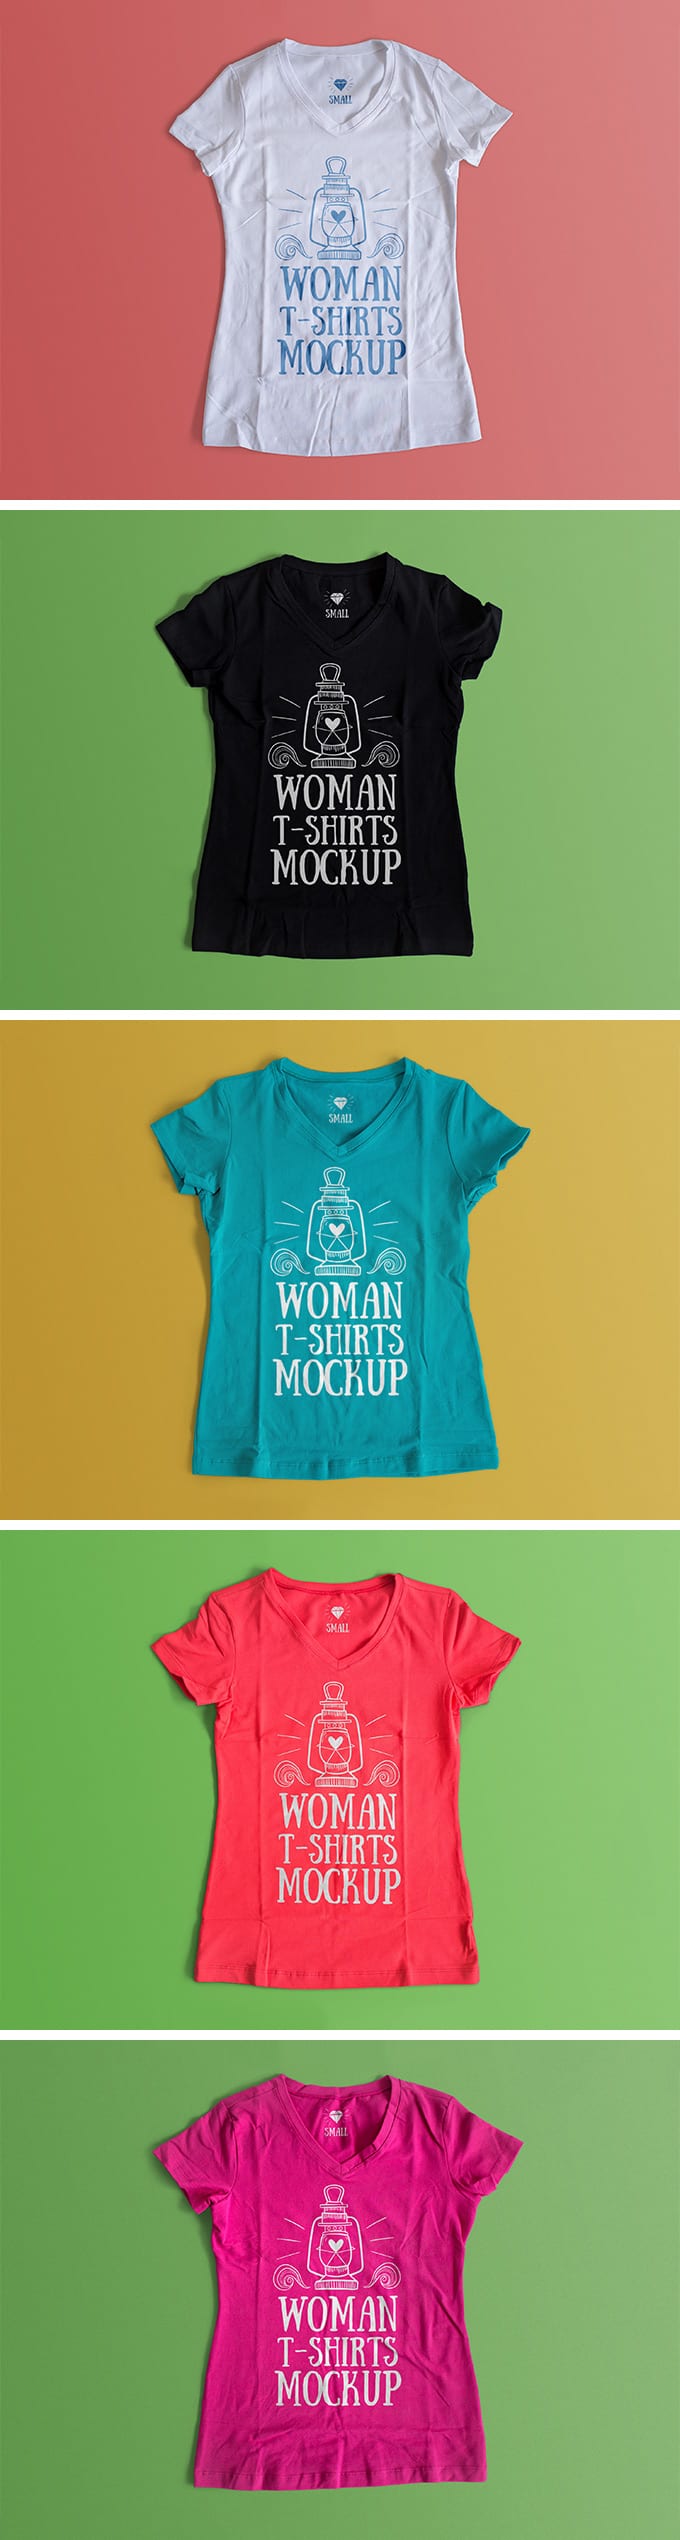 Download موك اب تي شيرت نسائي Woman T Shirt Mockup - جرافيكس العرب ...